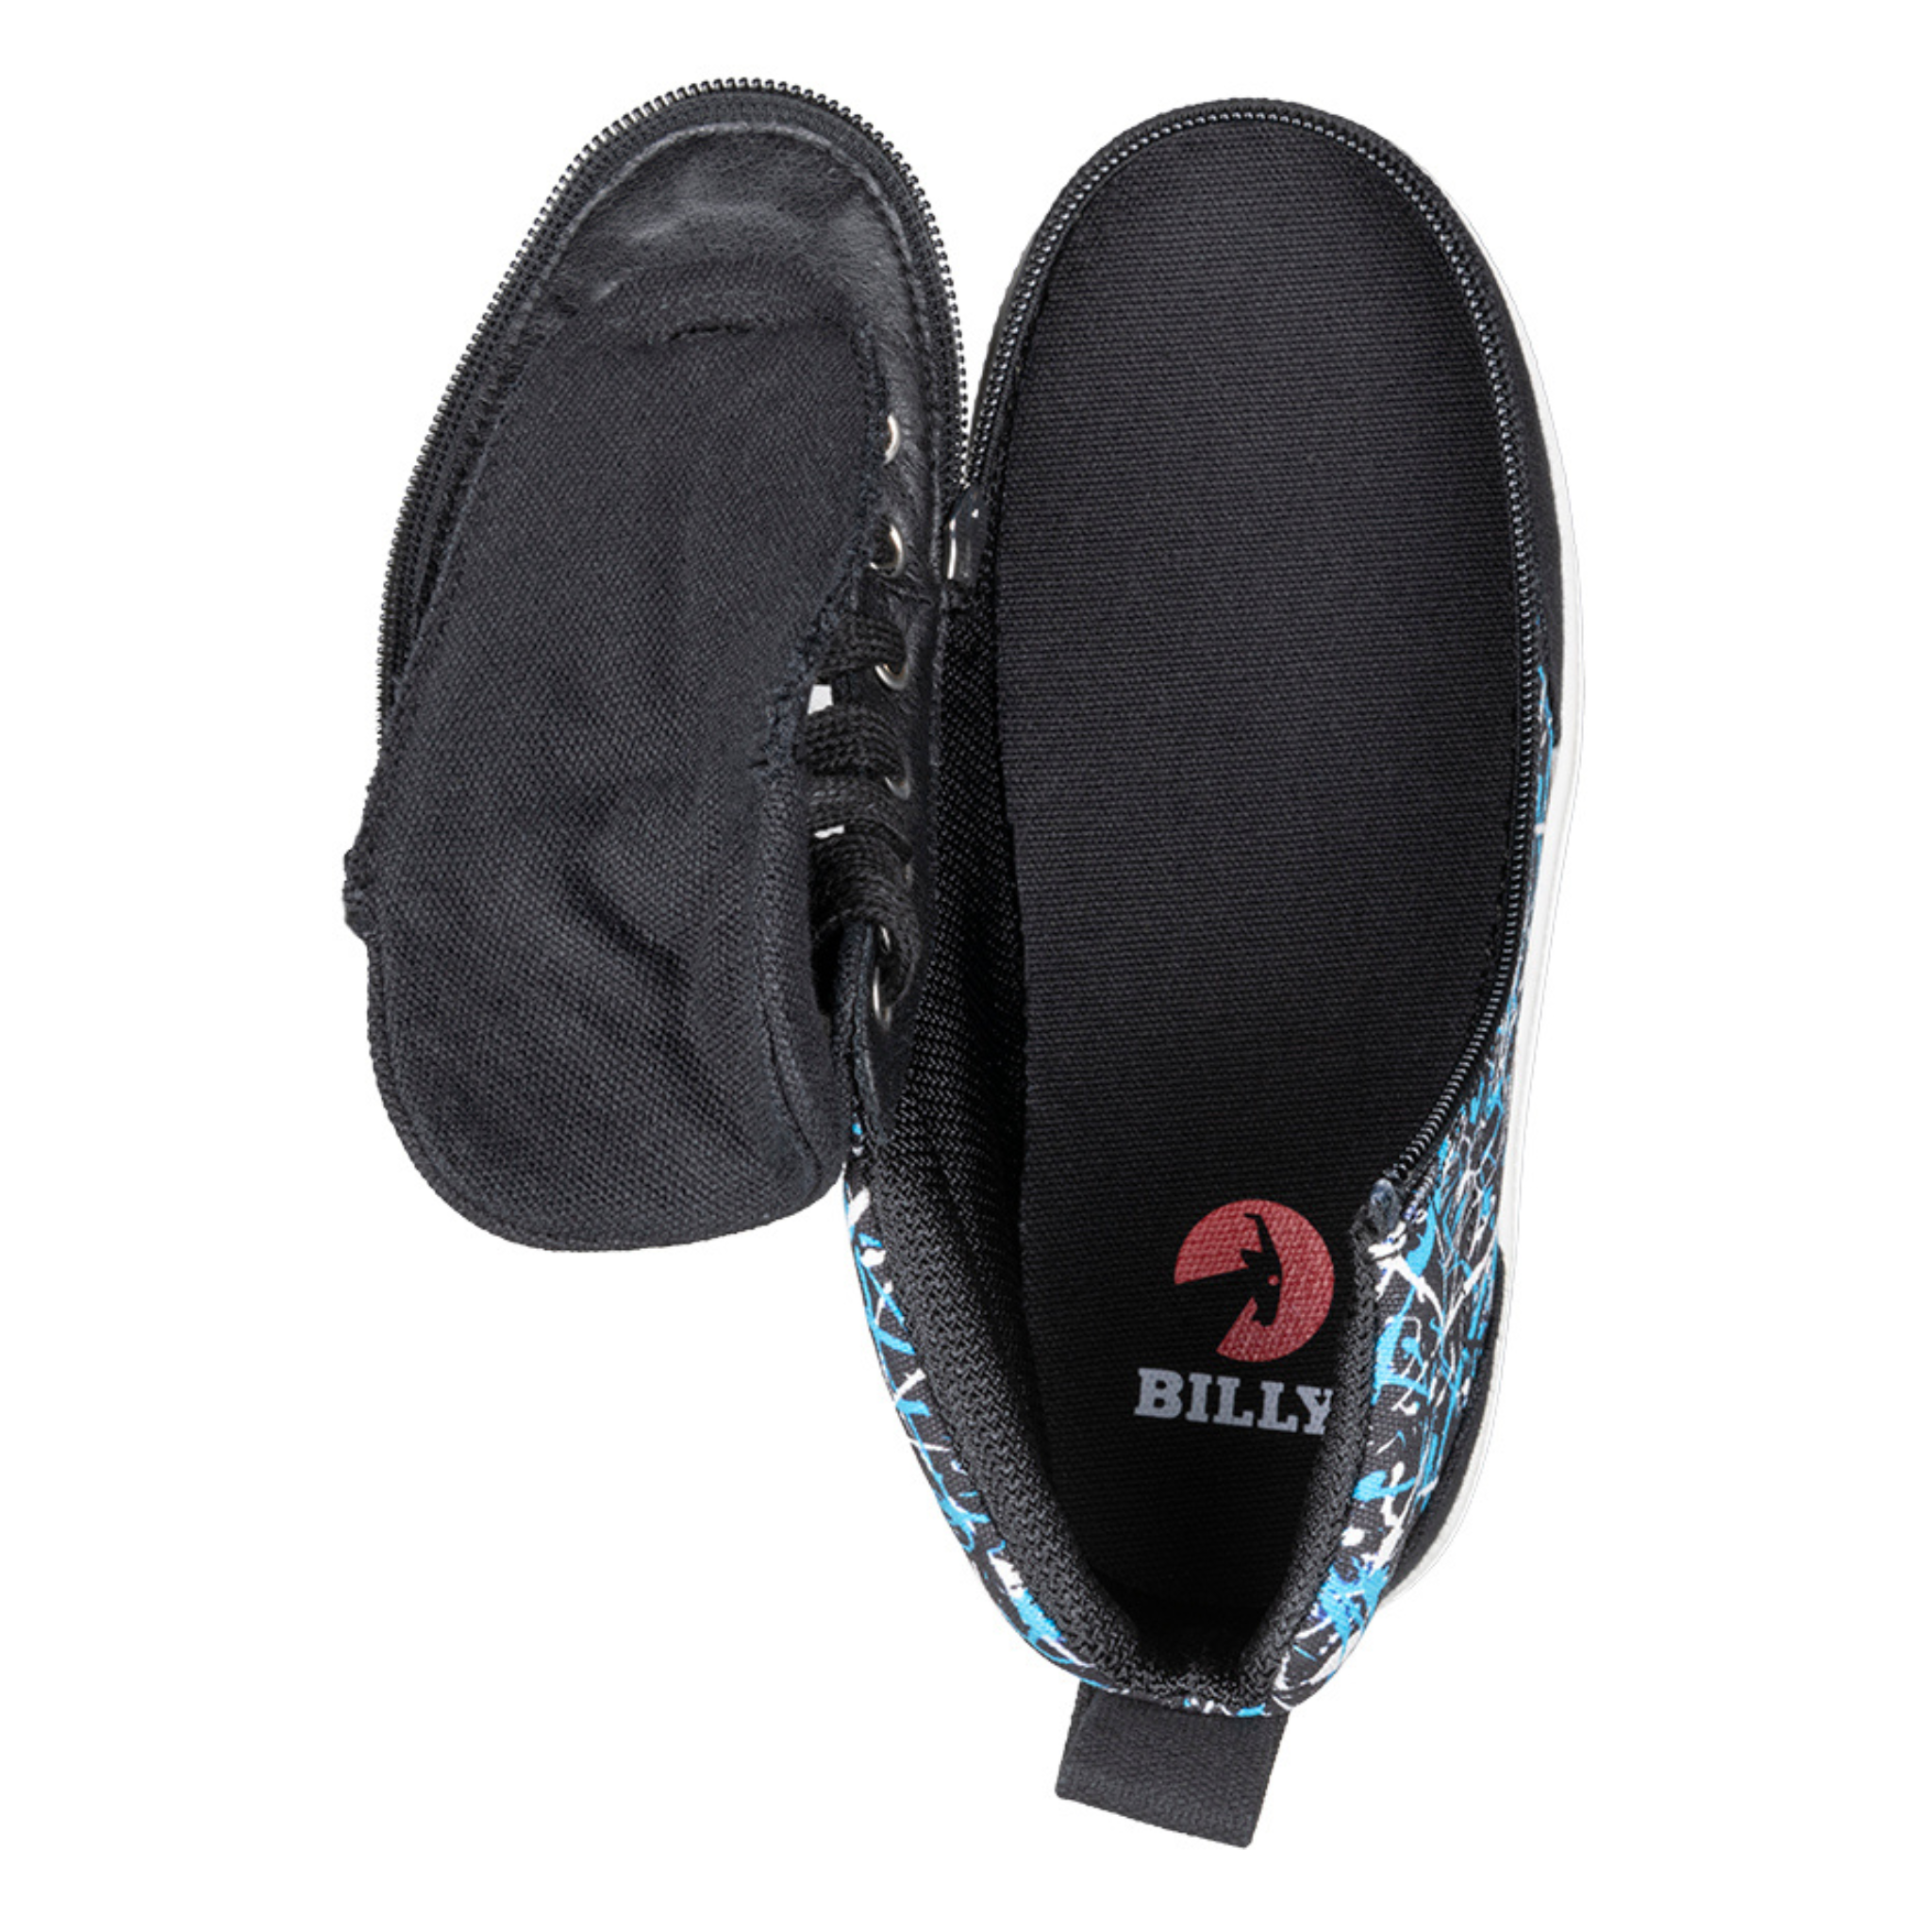 Billy Footwear (Kids) - High Top D|R Black Graffiti Canvas Shoes